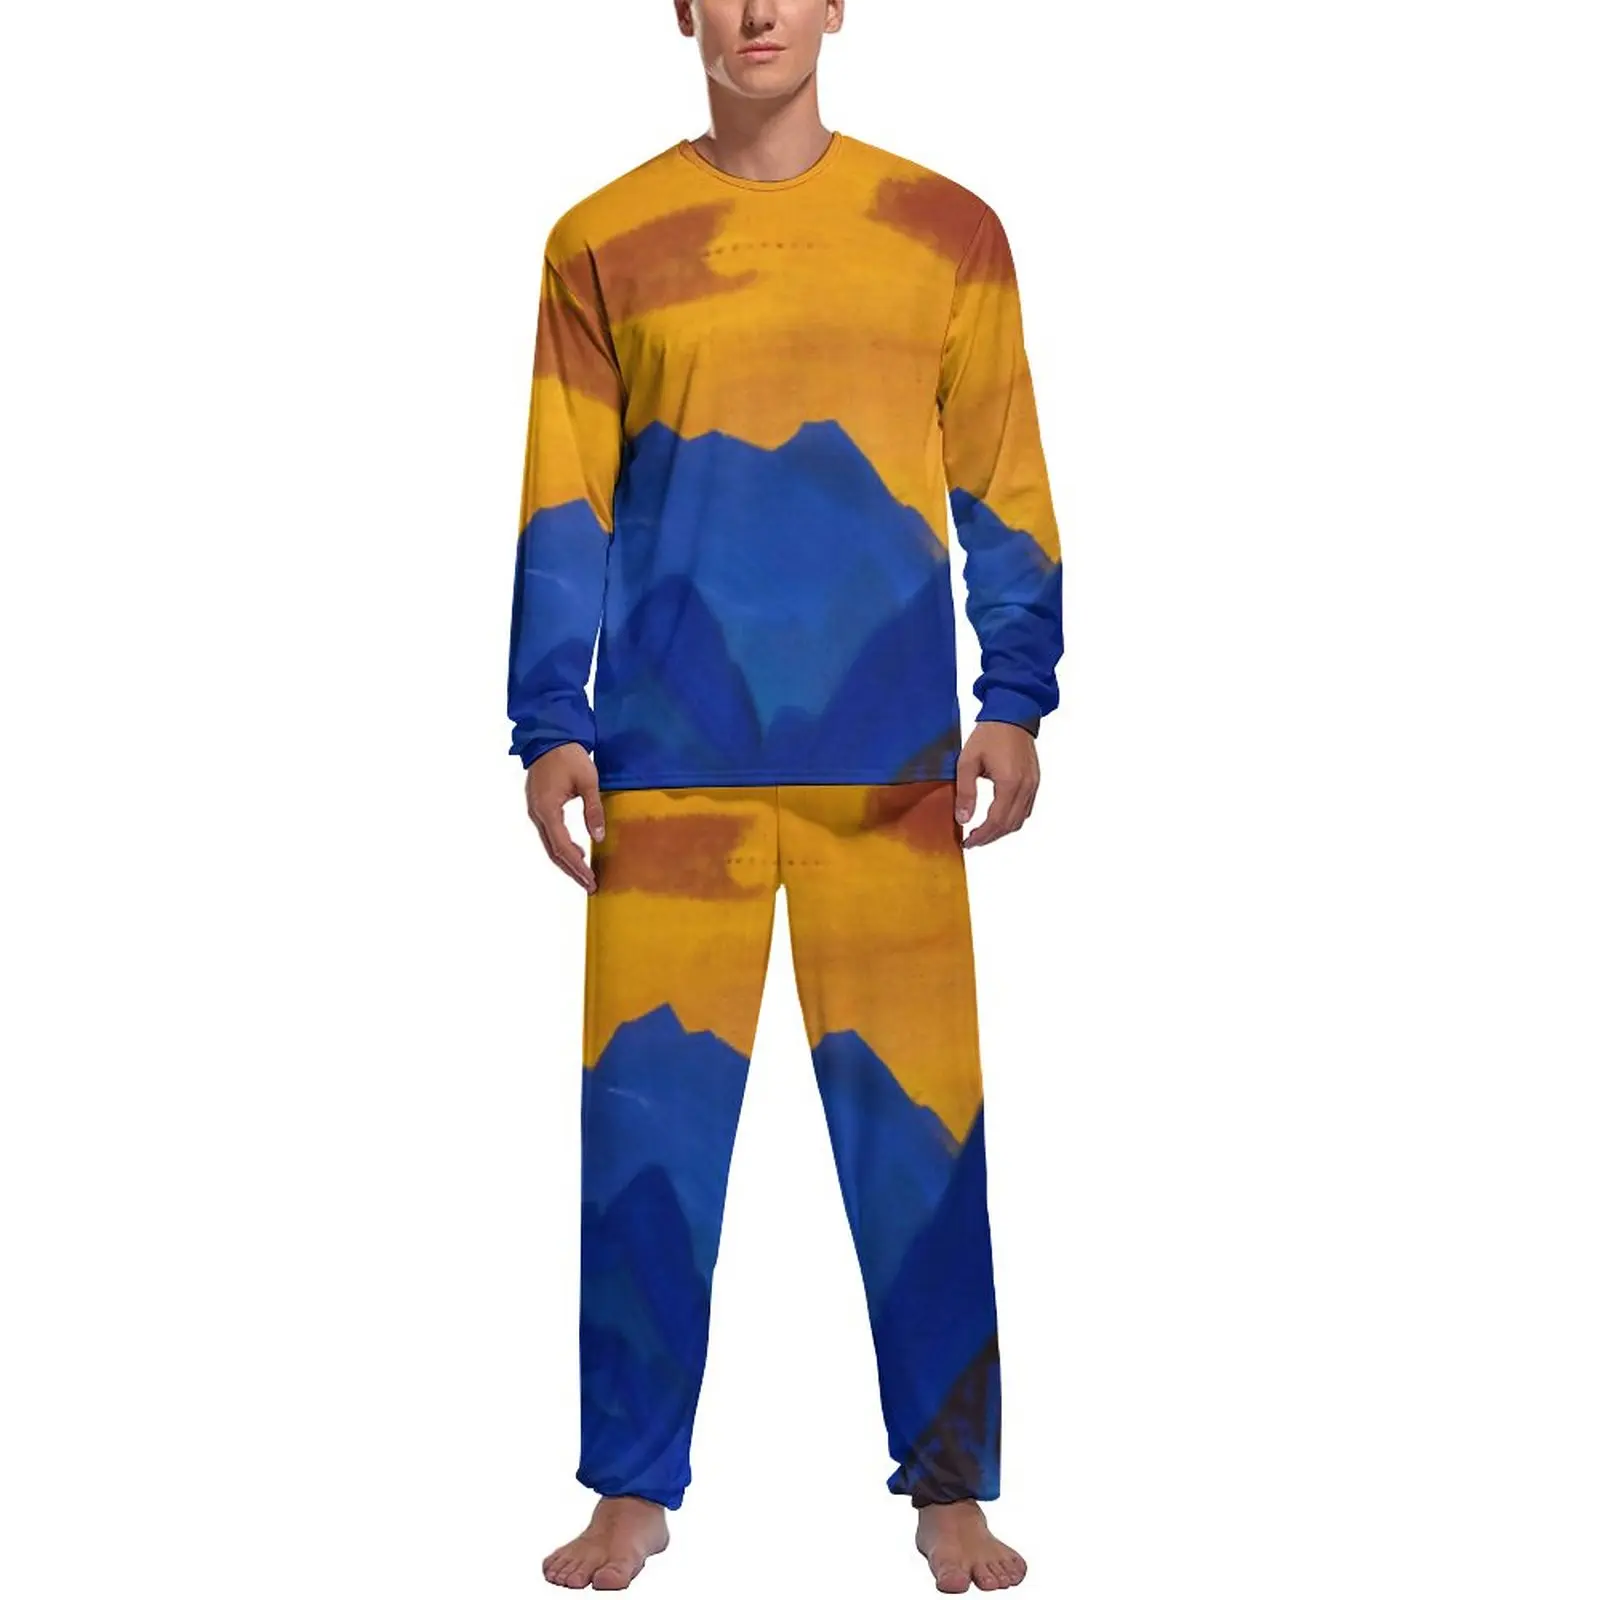 Evening Mountain Pajamas Man Nicholas Roerich Cool Nightwear Spring Long Sleeve 2 Pieces Casual Graphic Pajama Sets